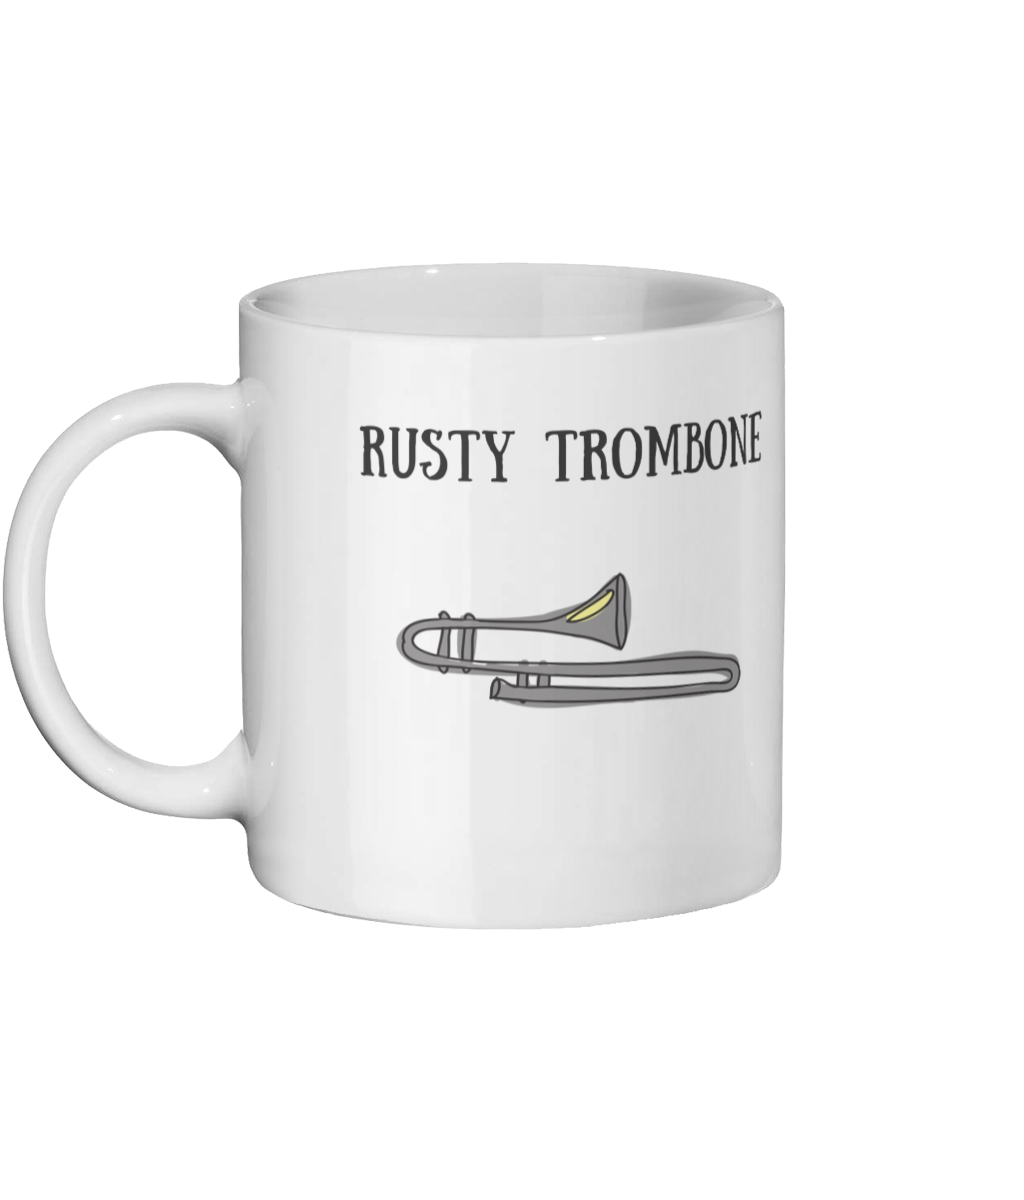 rusty trumpet urban dictionary